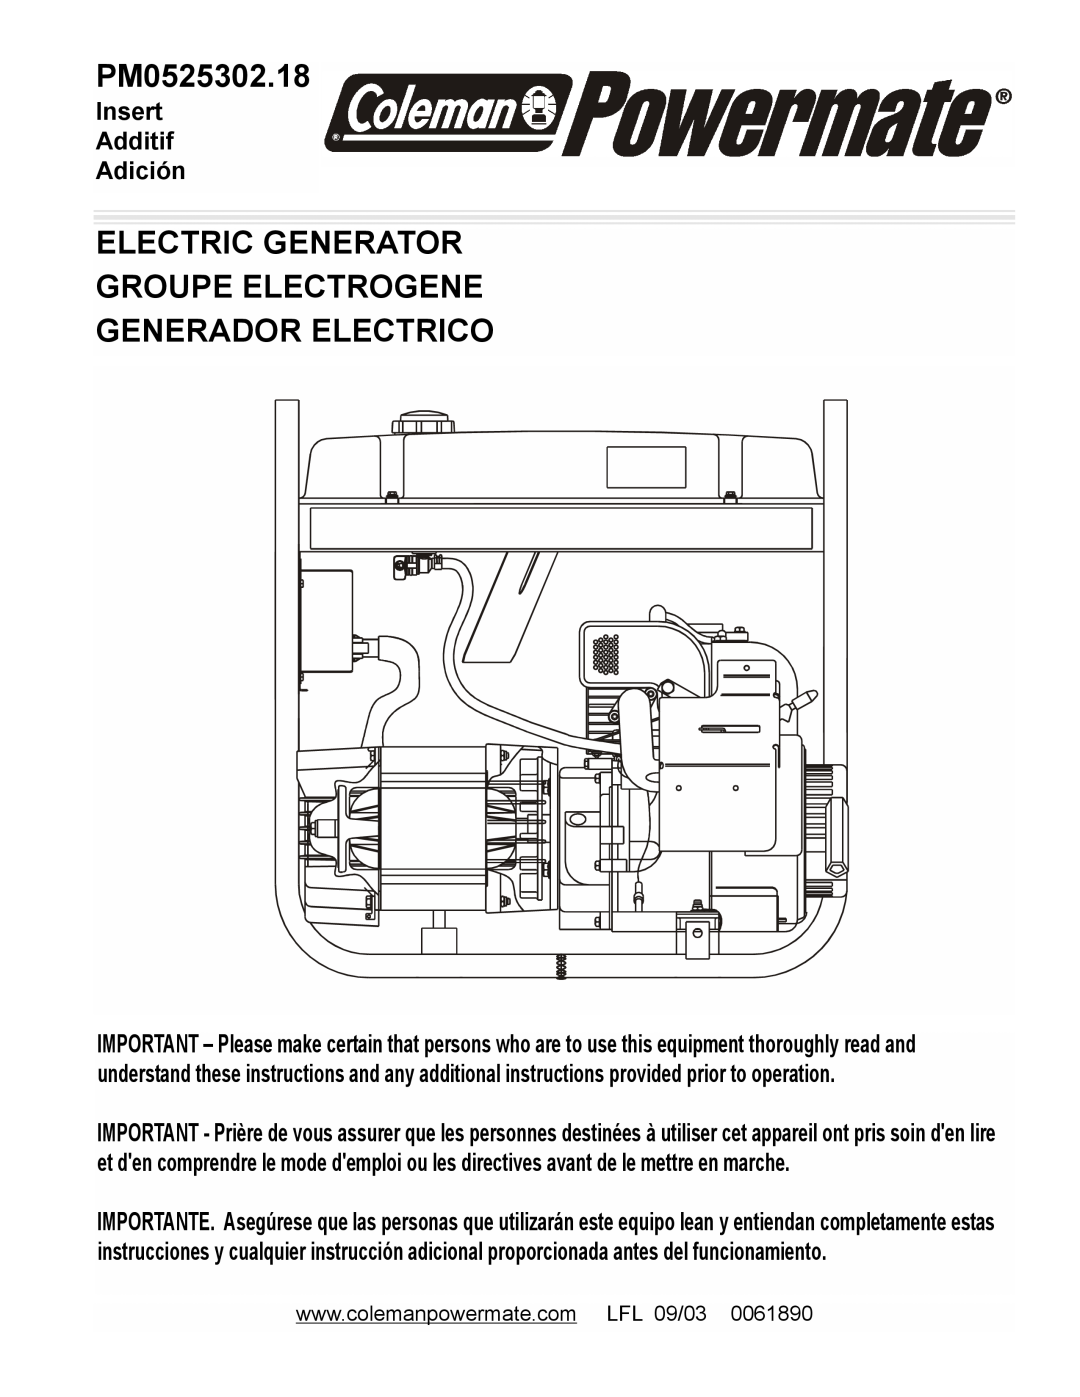 Coleman PM0525302.18 manual Electric Generator Groupe Electrogene, Generador Electrico, Insert Additif Adición 